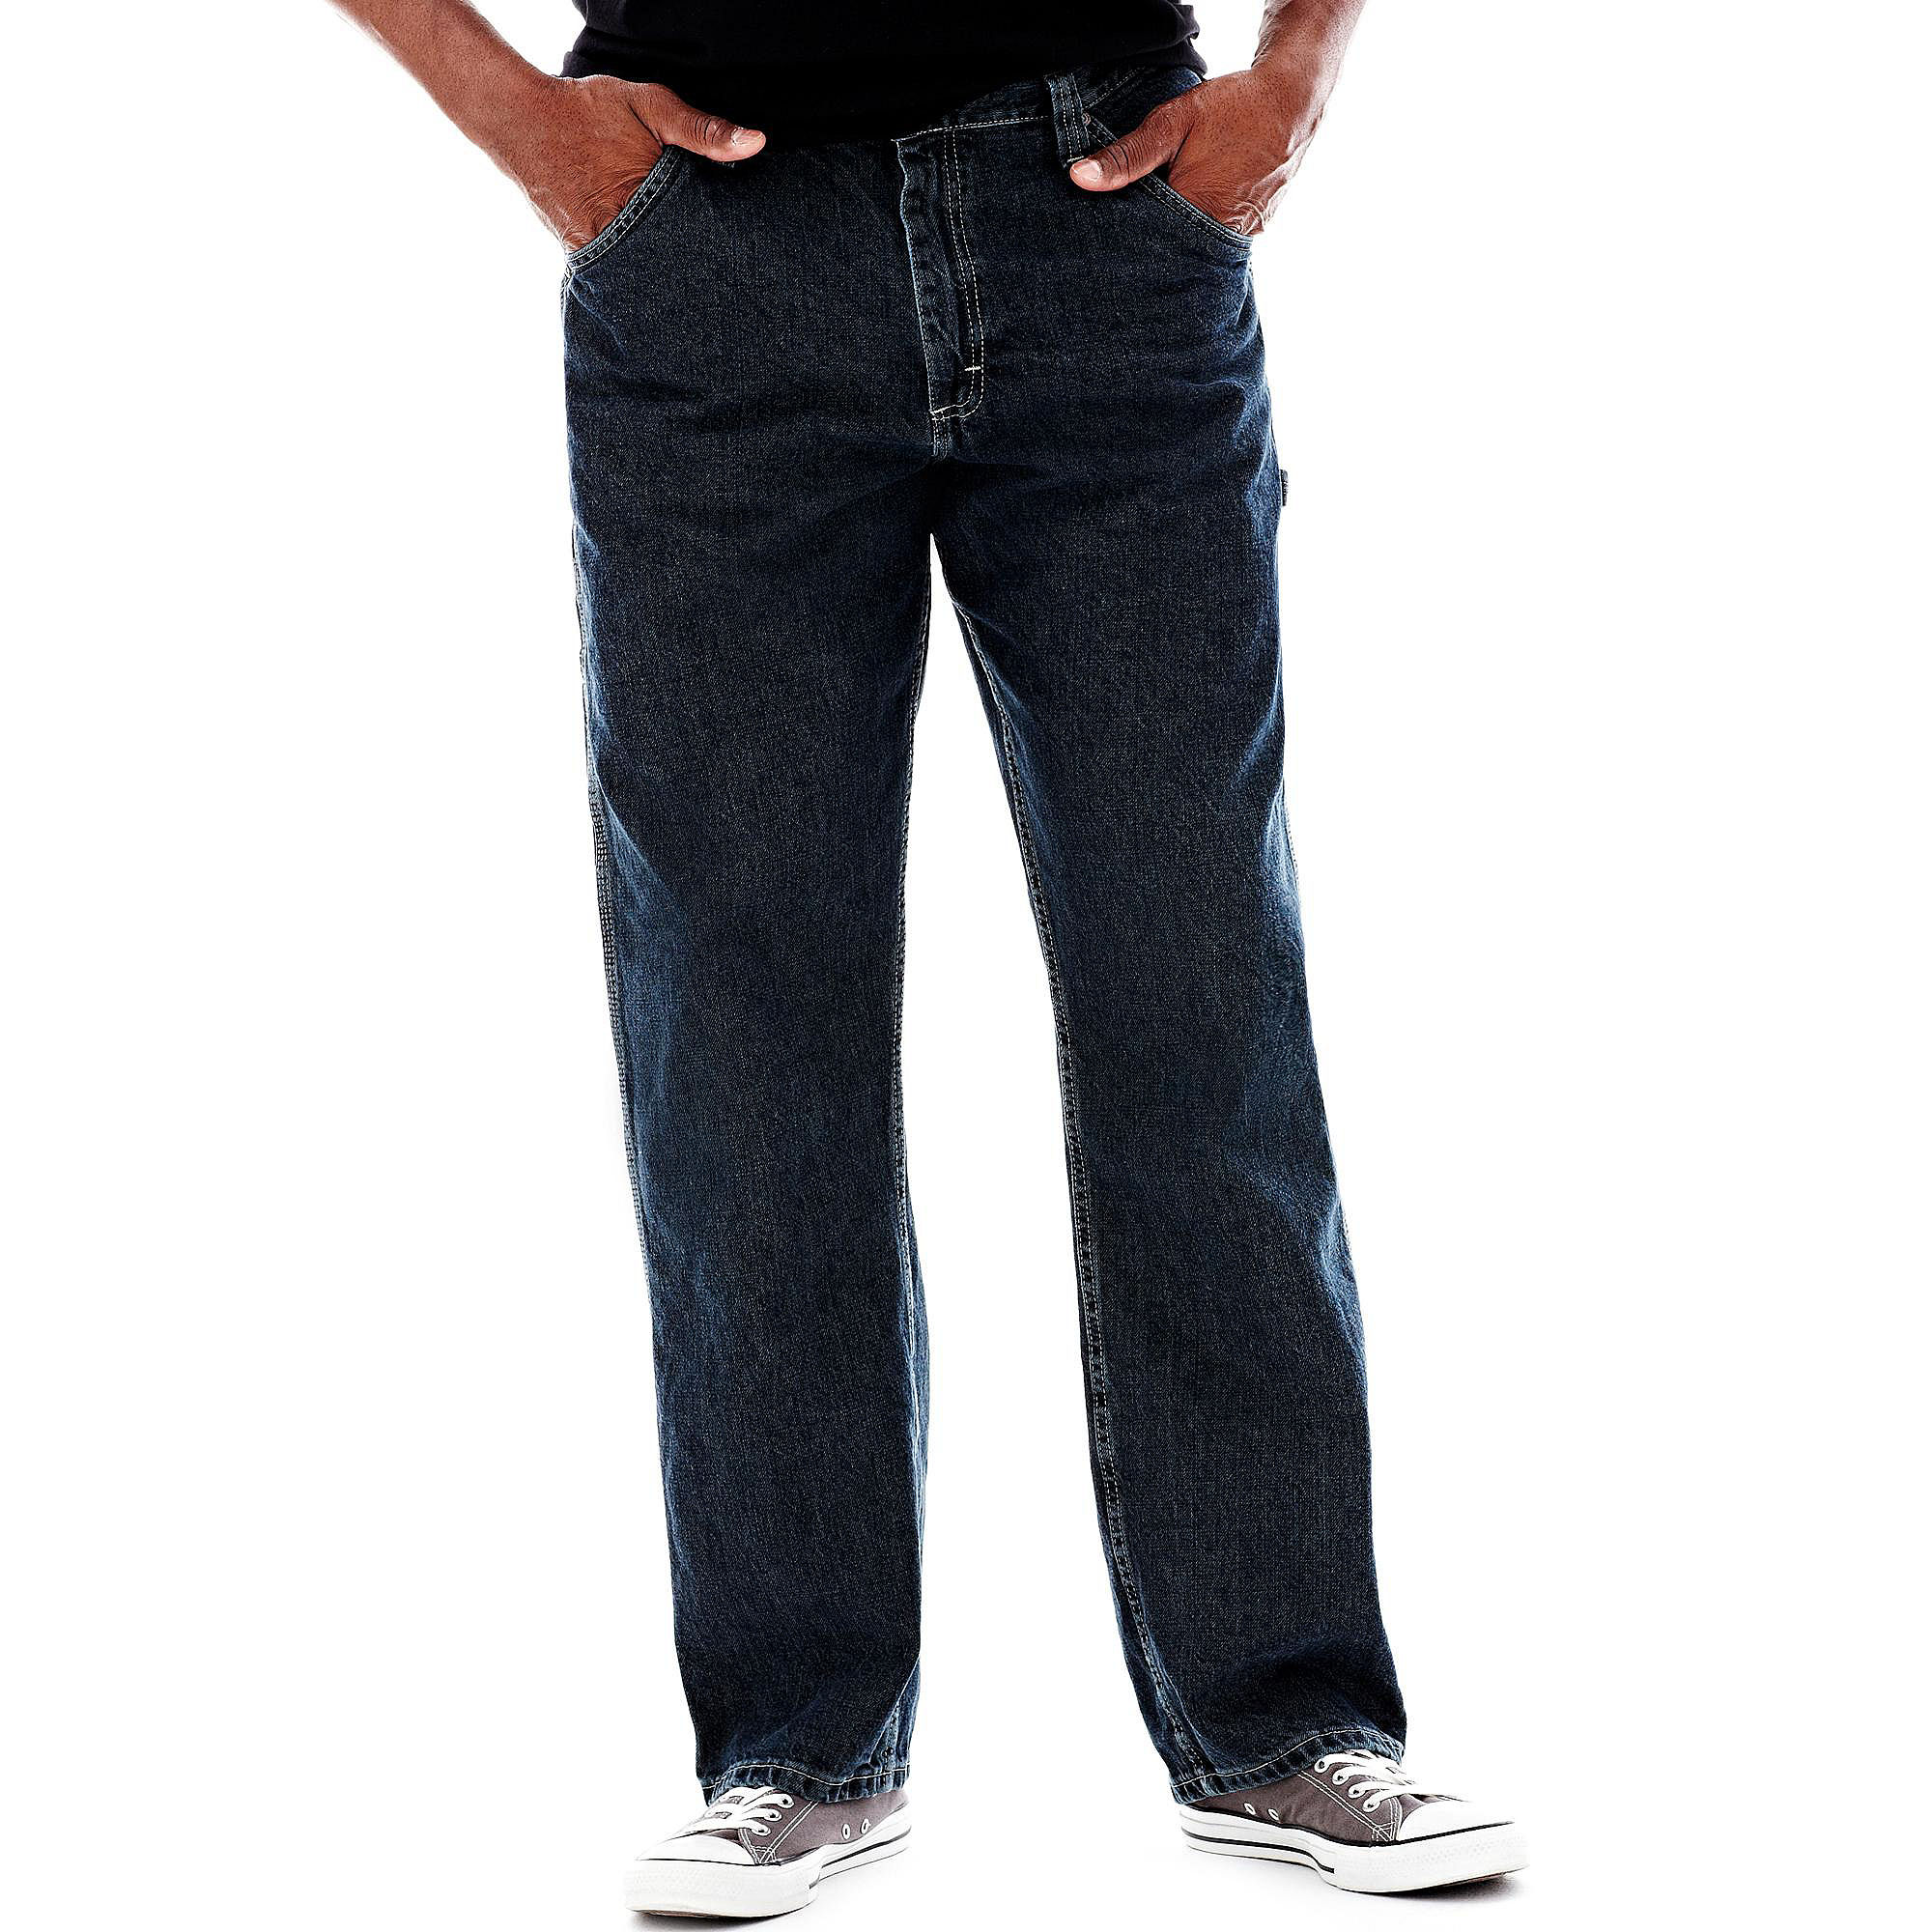 Lee Carpenter Jeans-Big & Tall $41.99 Shipped | Xổ số 18h